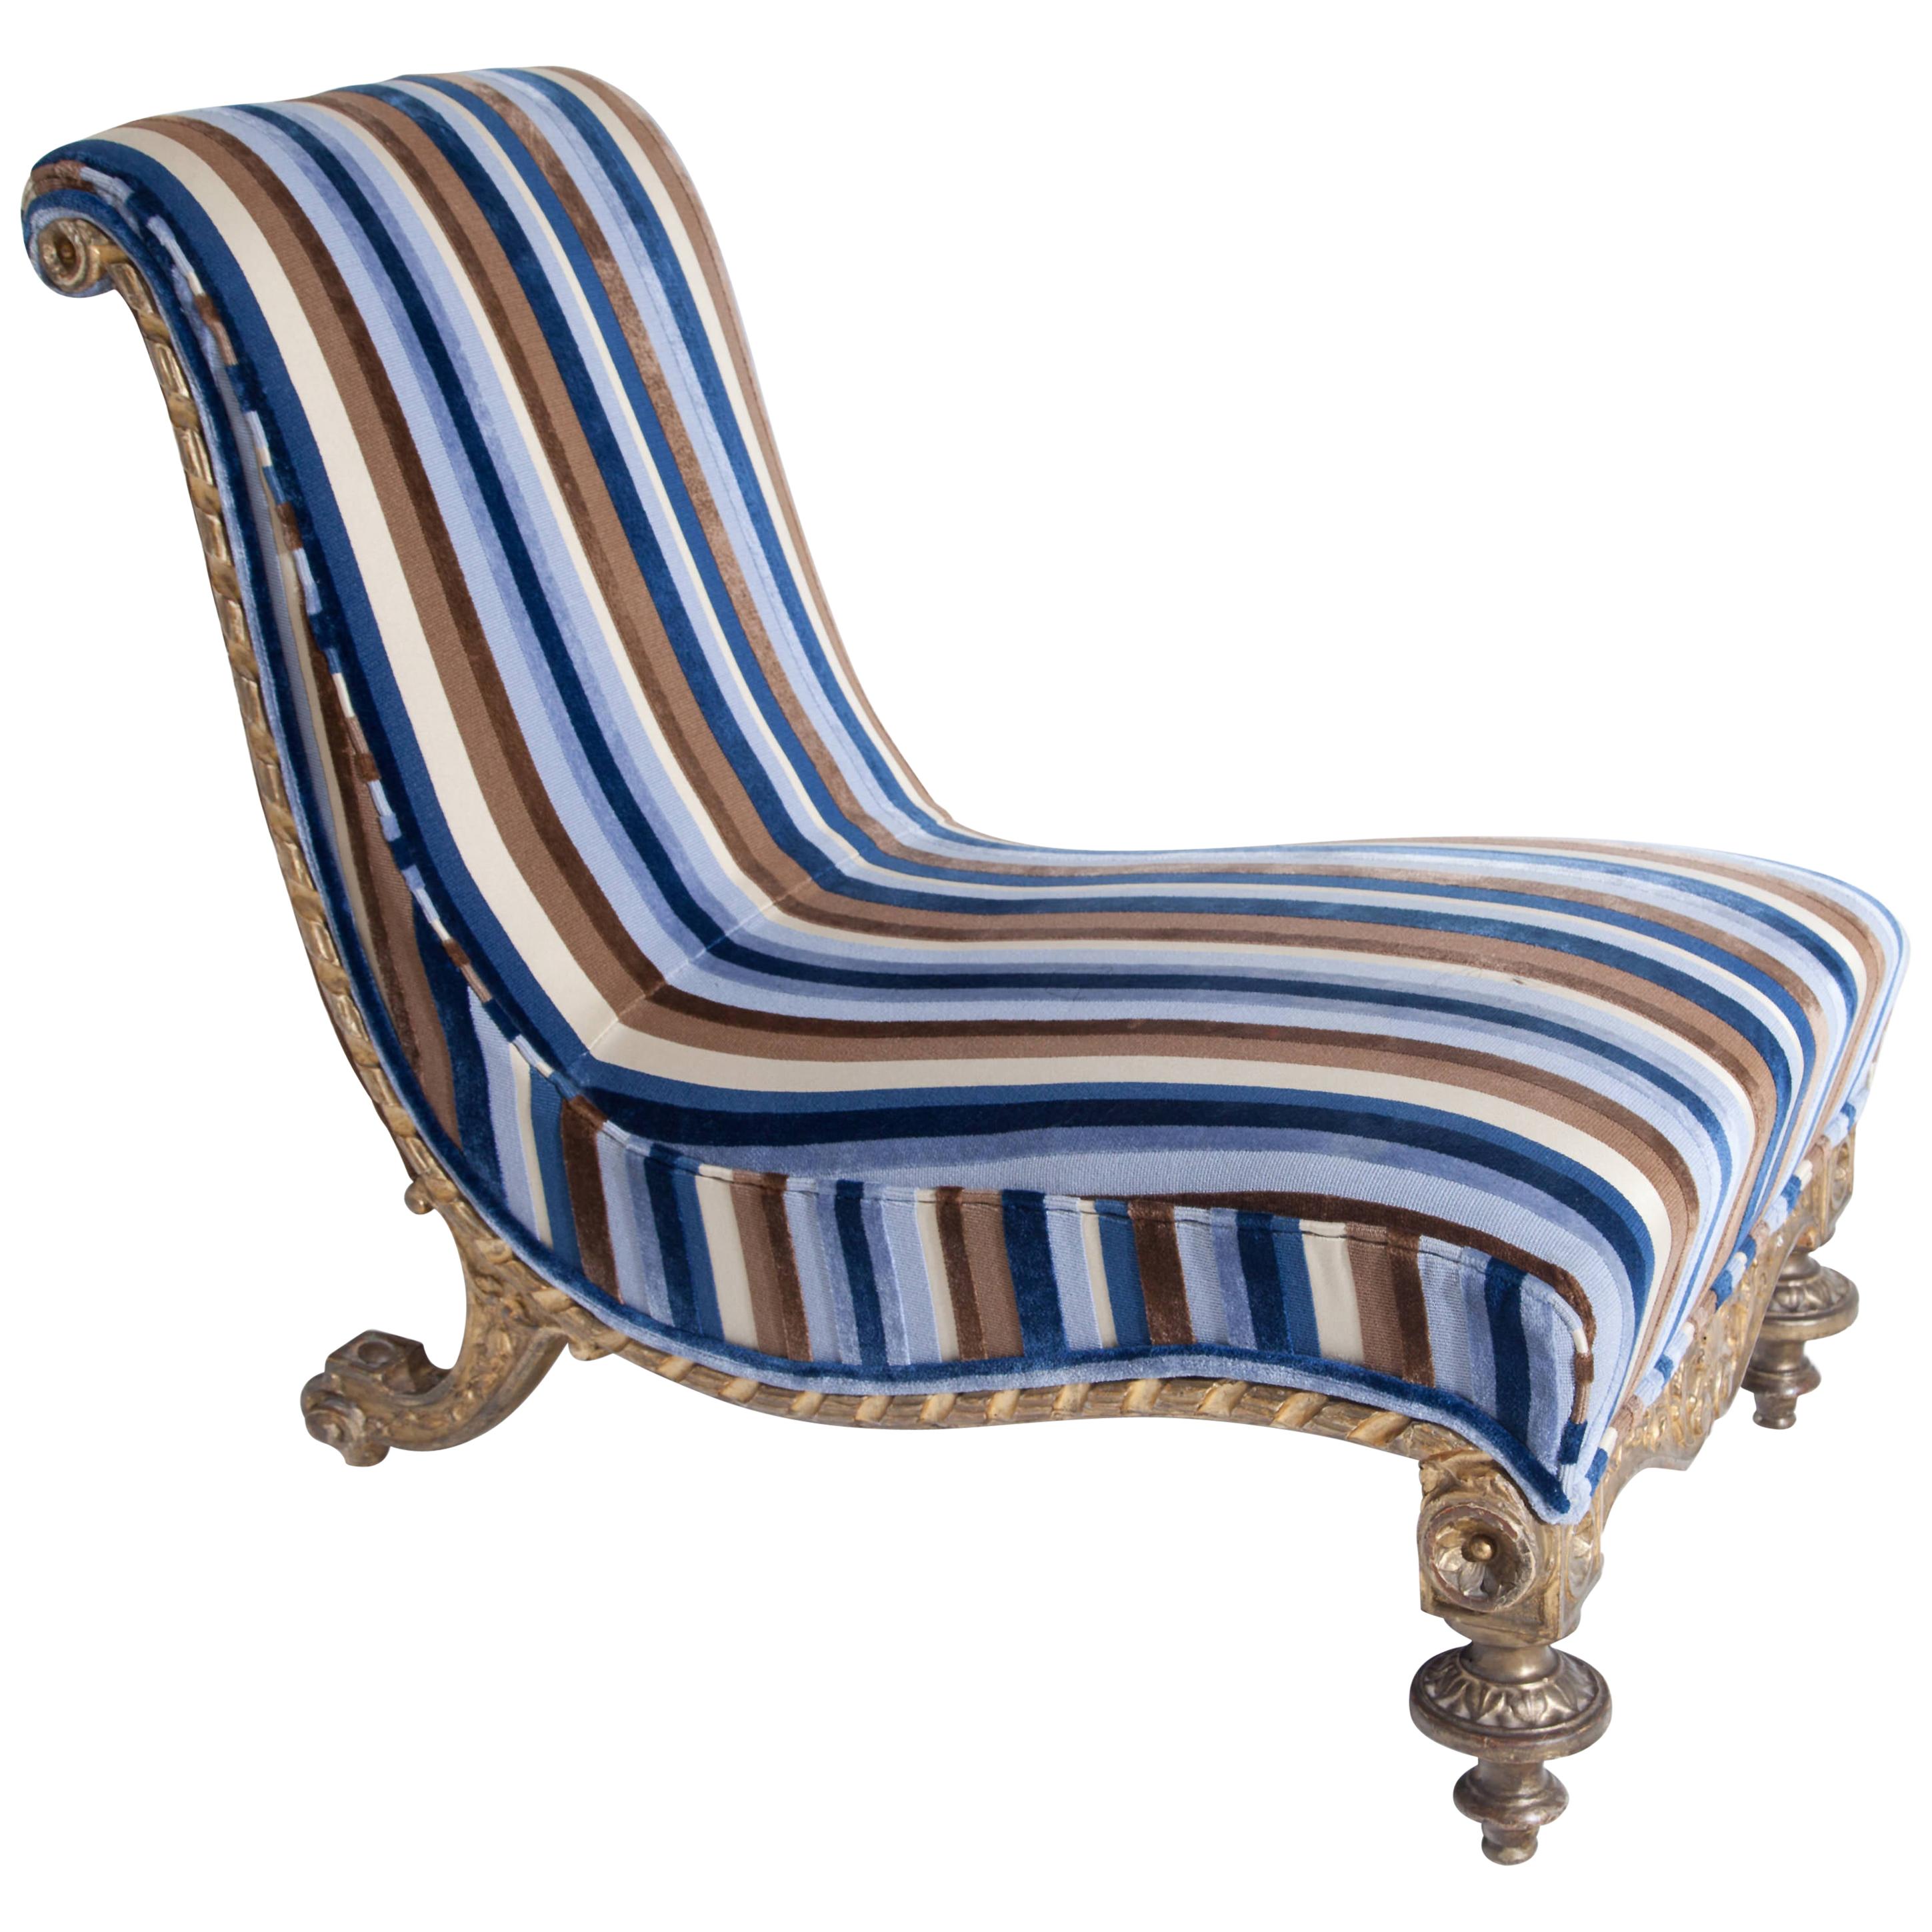 Gilt Lounge Chair, Italy/Lucca, circa 1825-1830